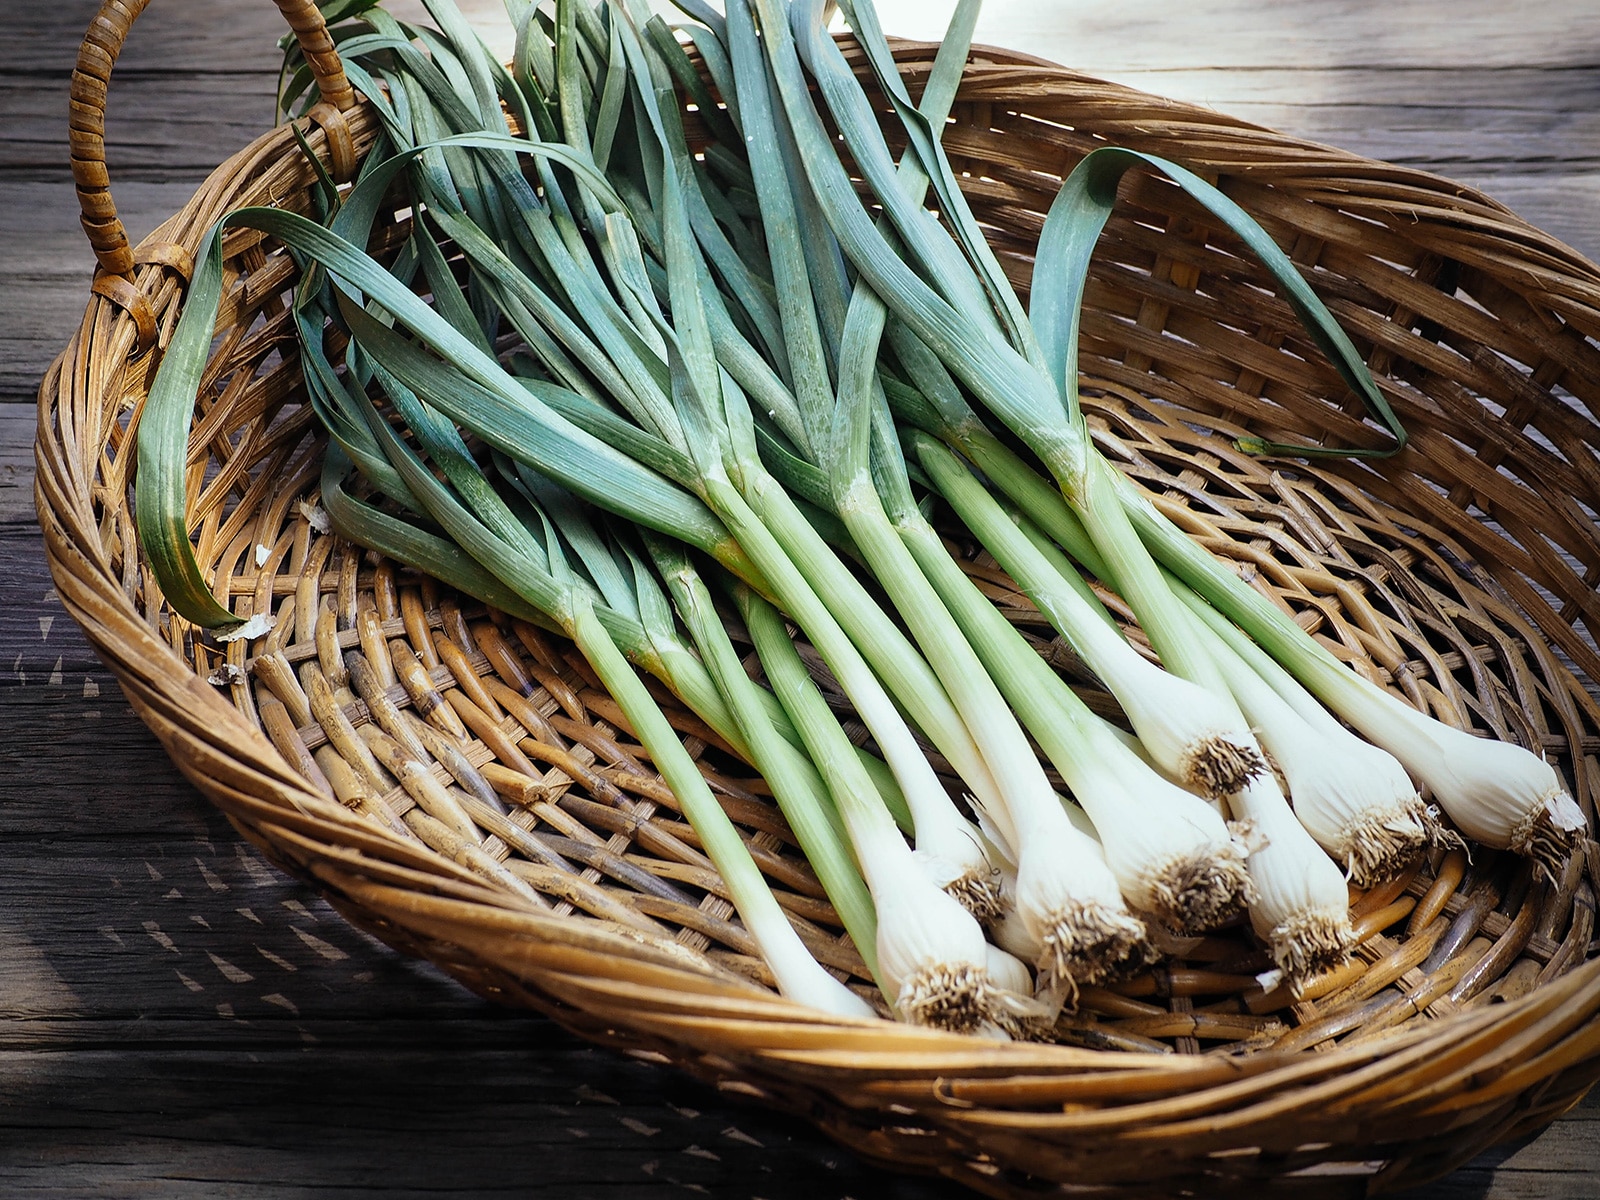 Basket of homegrown spring garlic, also called green garlic